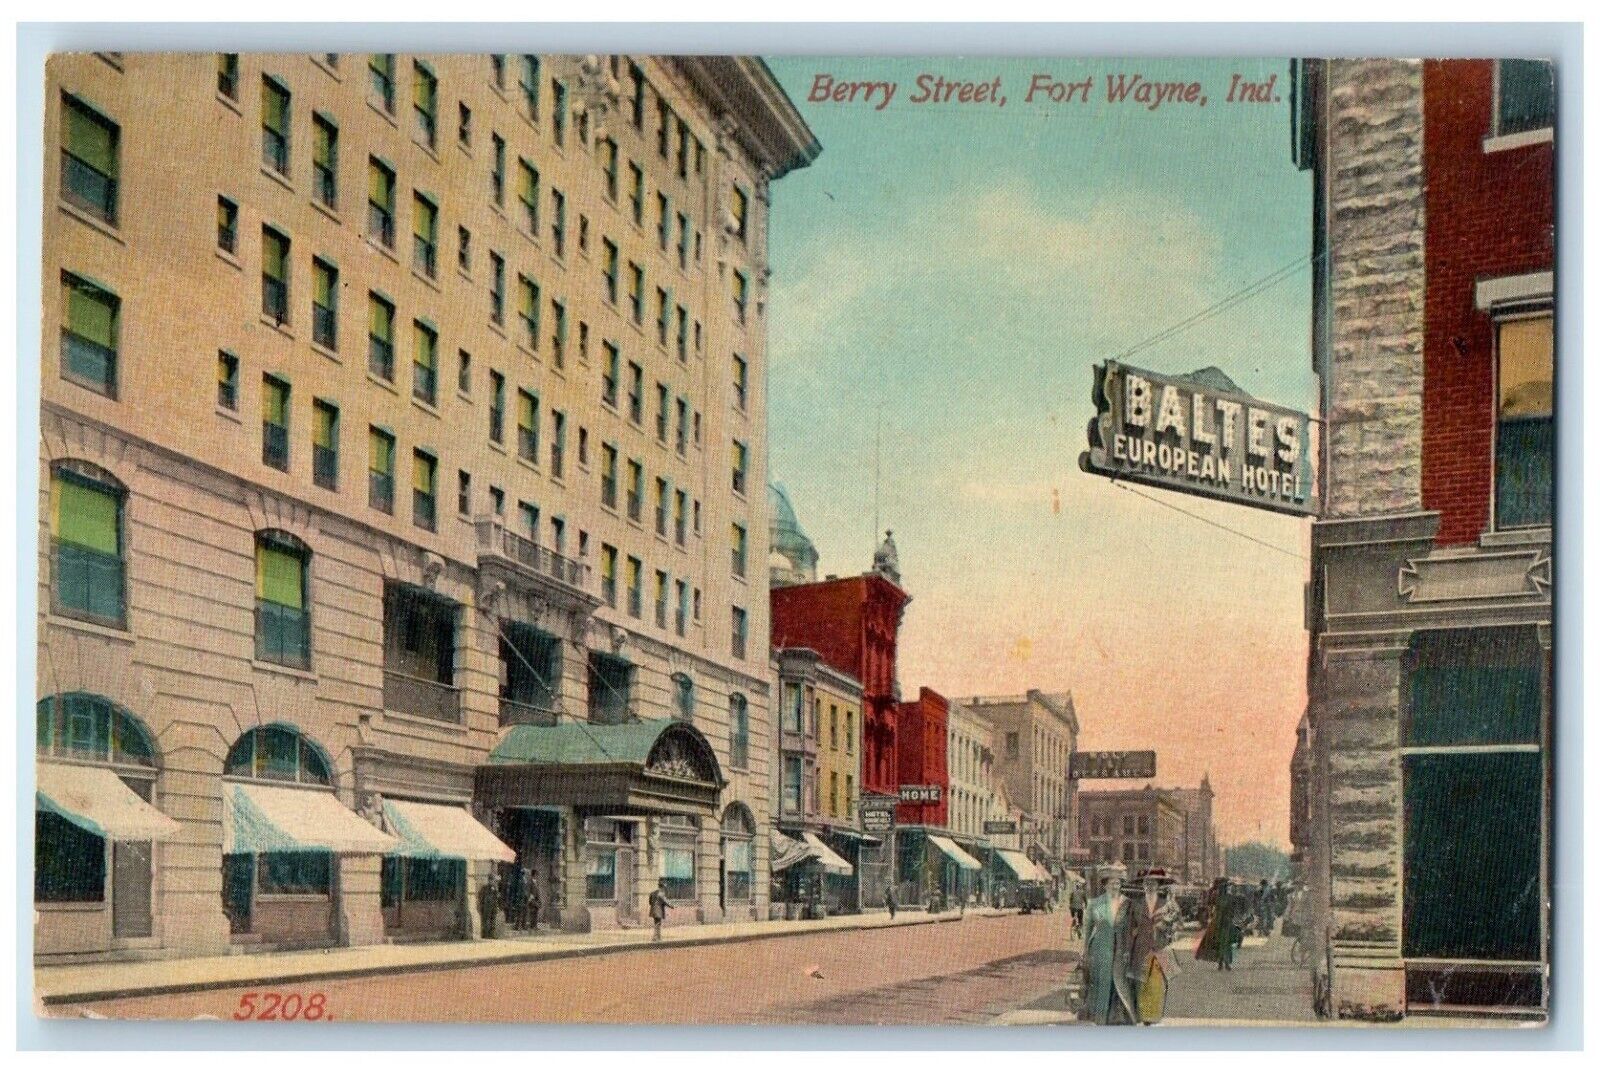 c1910 Baltes European Hotel Berry Street Fort Wayne Indiana IN Antique Postcard